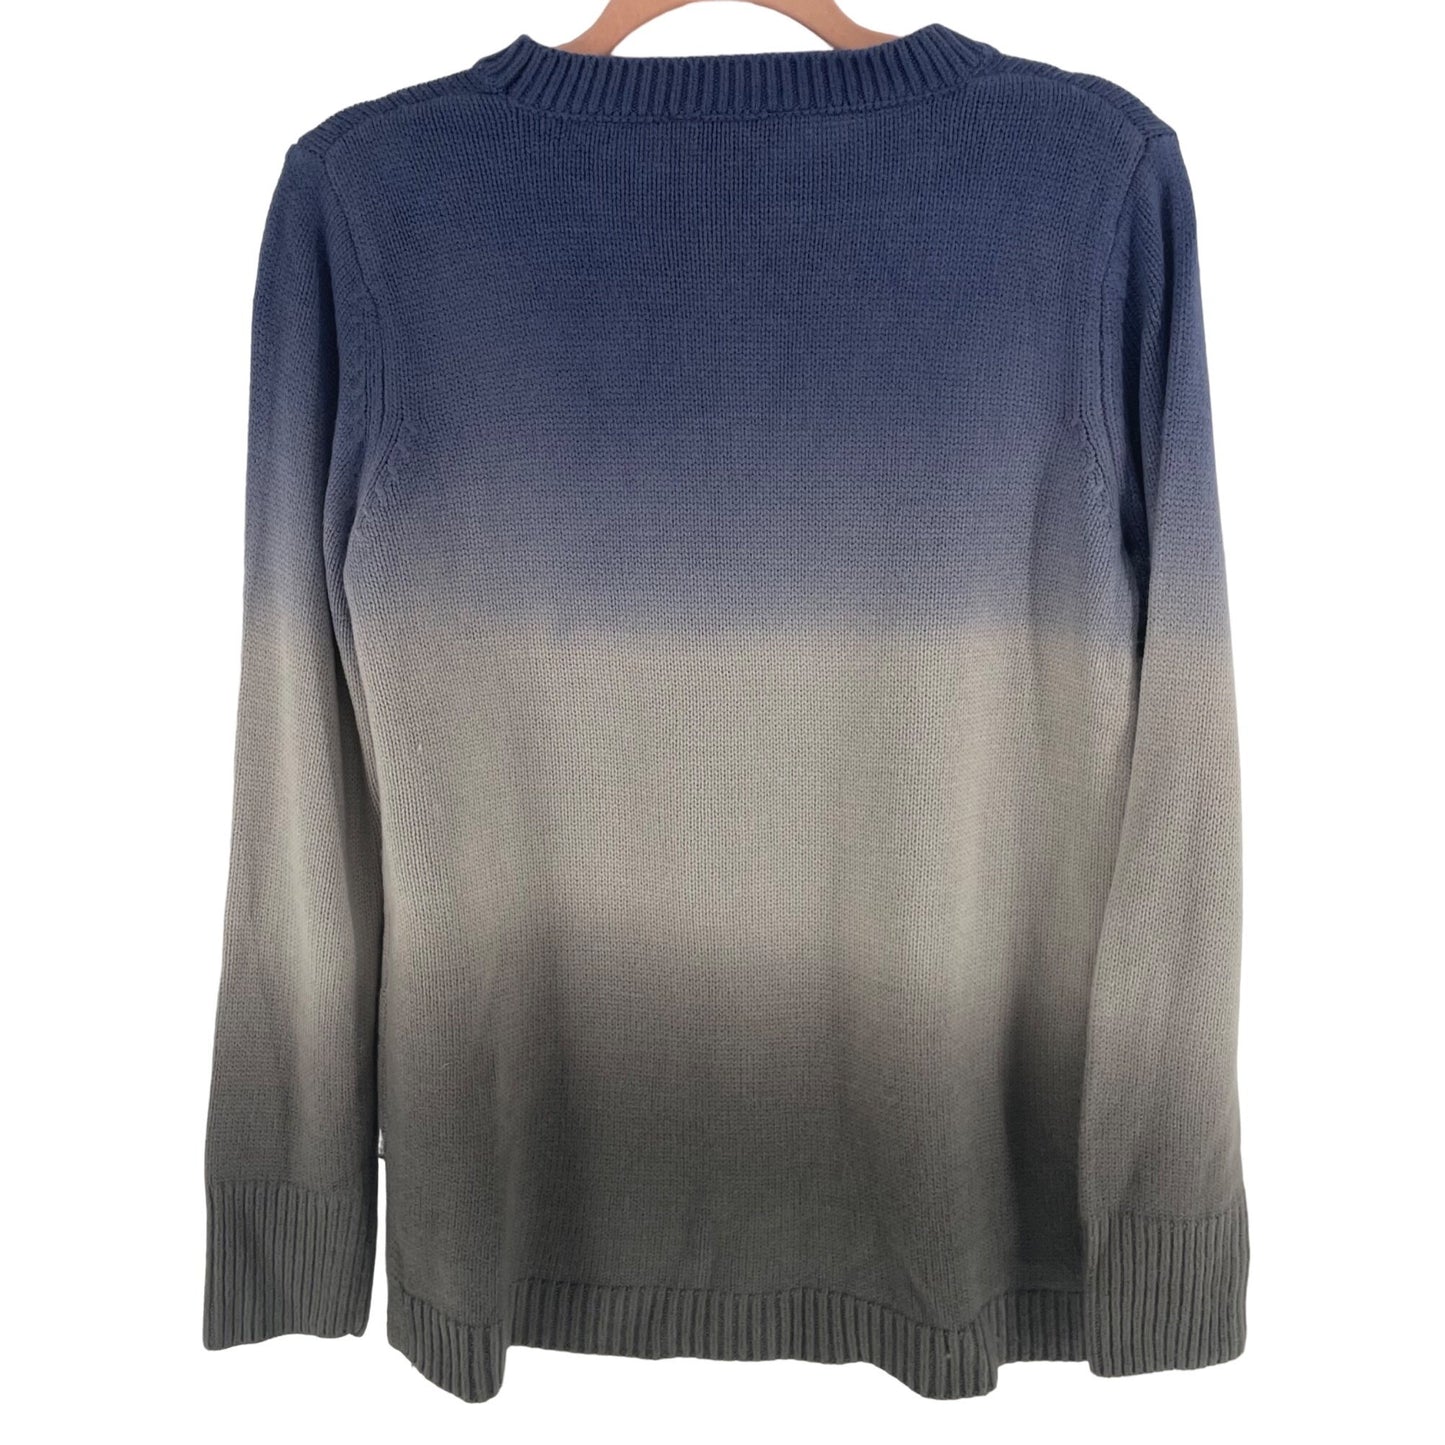 Simply Vera Wang Women's Size Small Purple & Grey Sweater